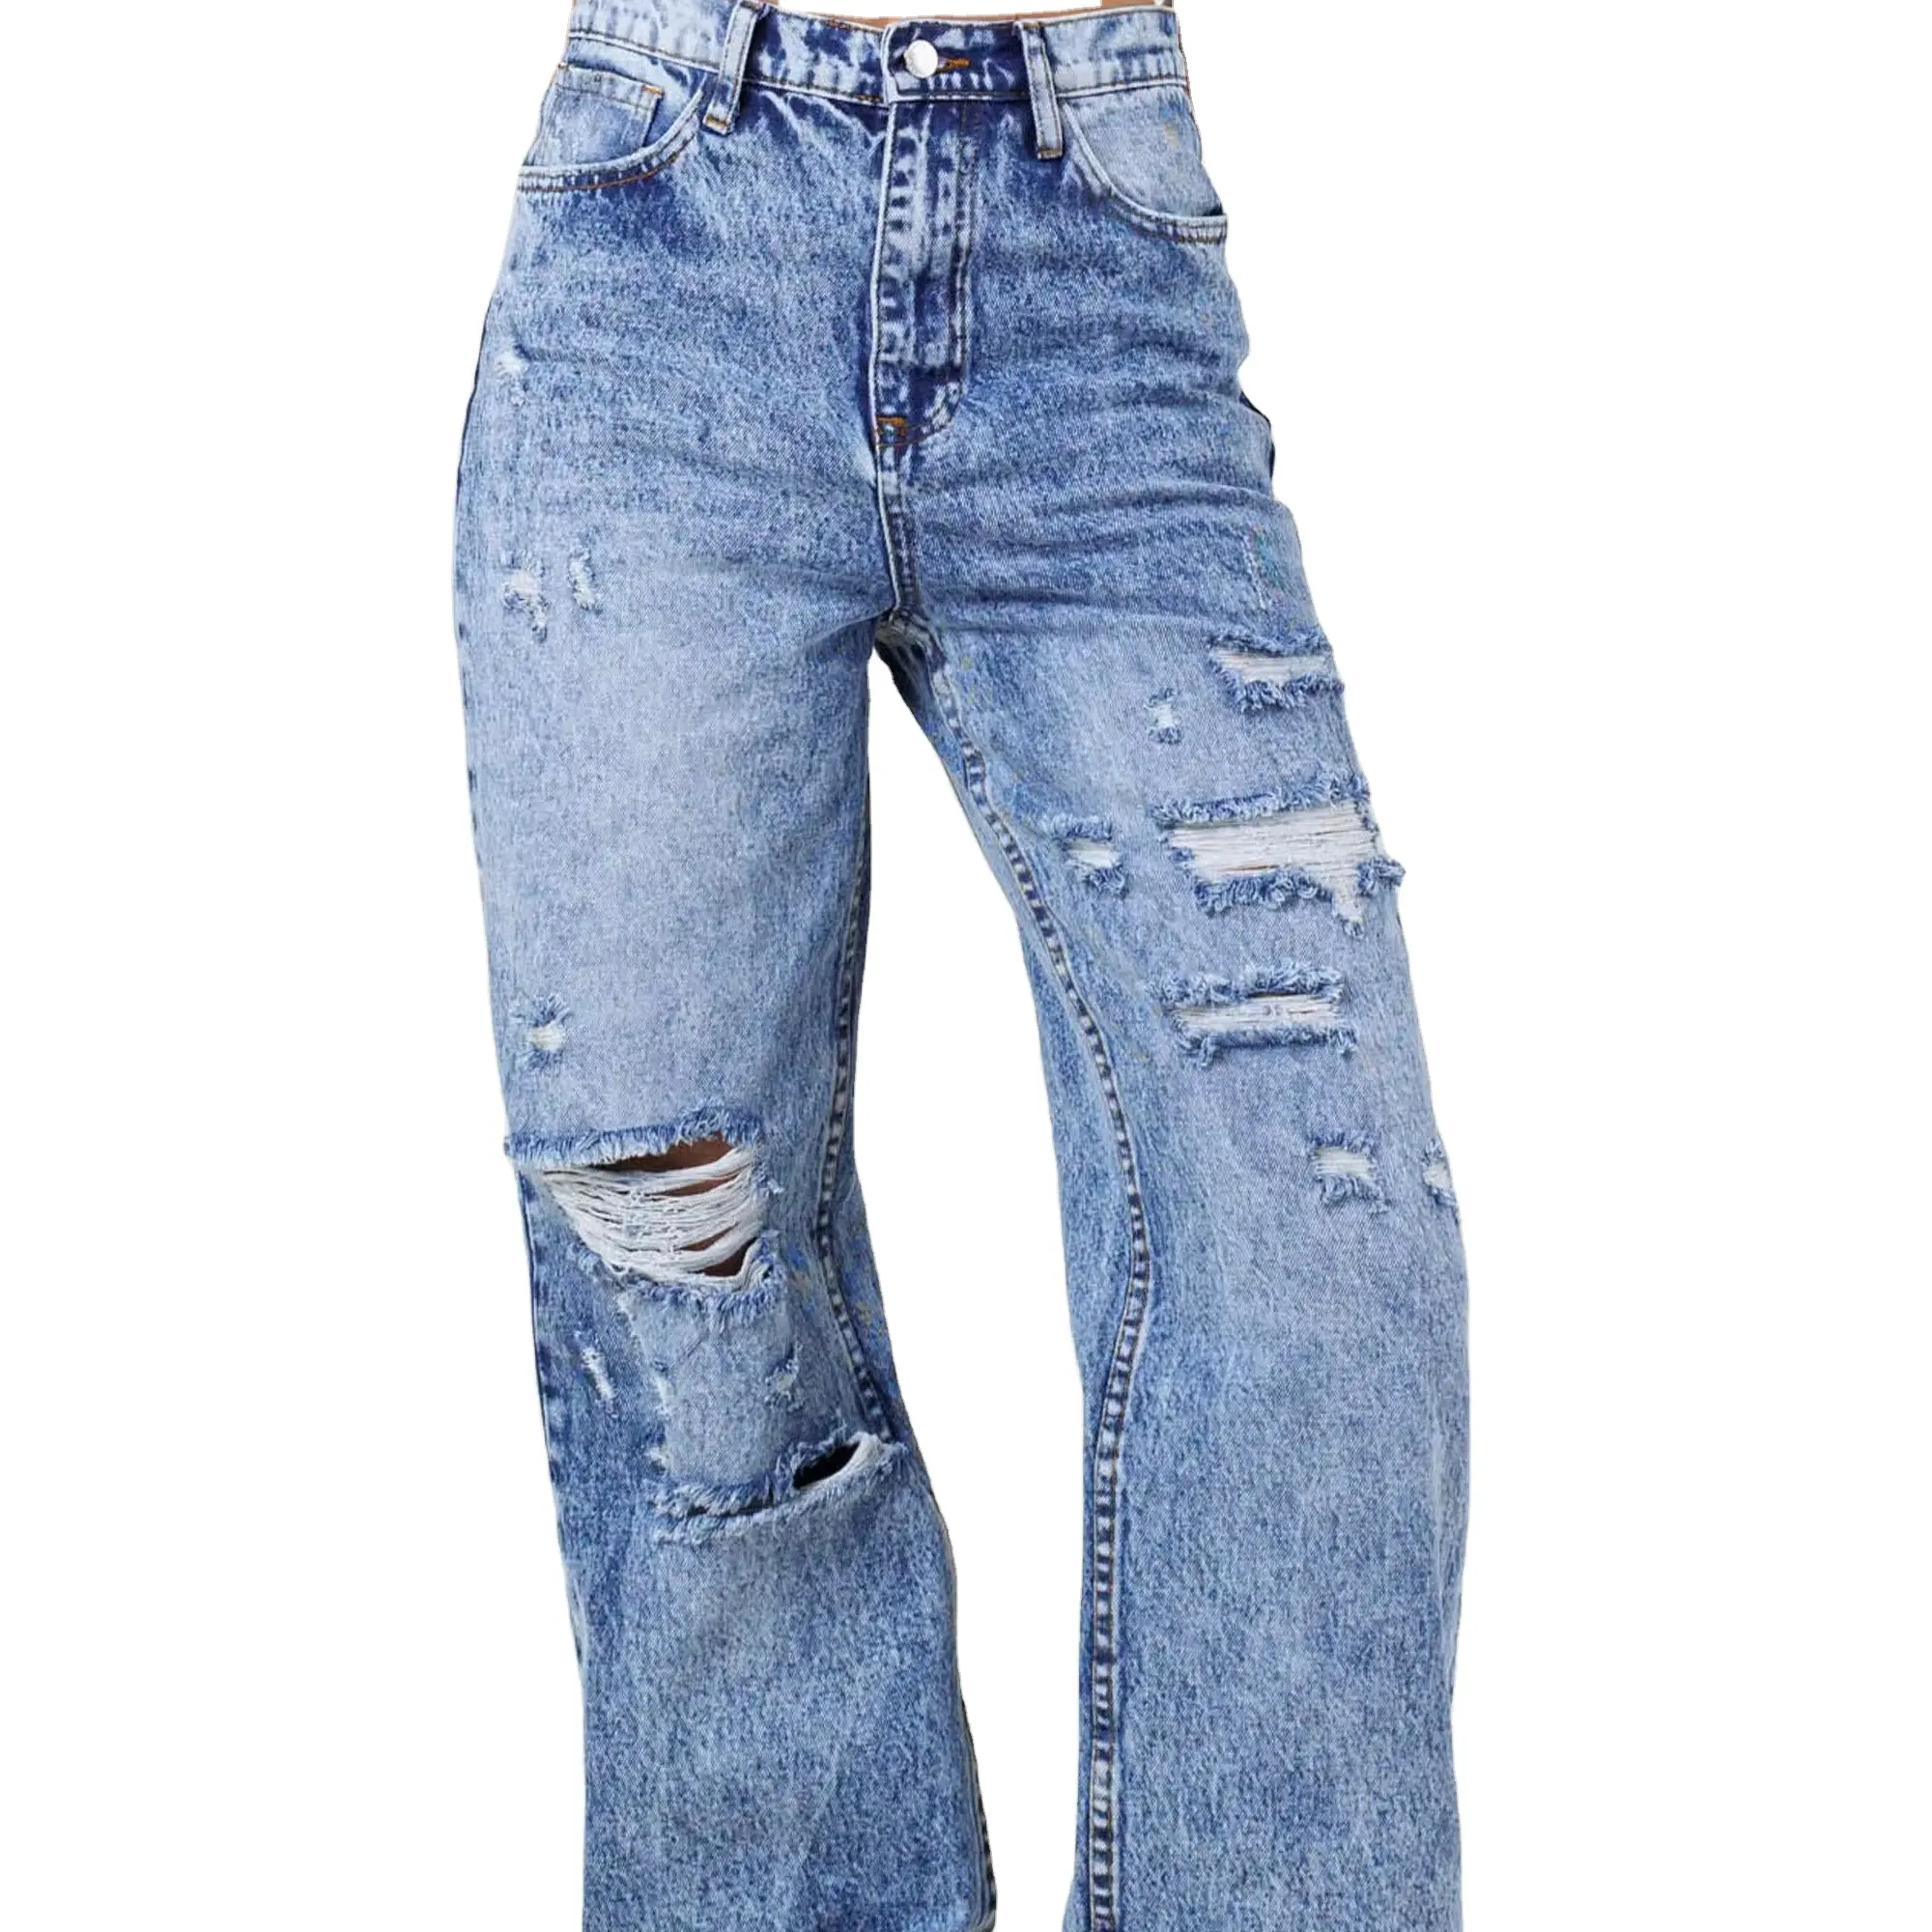 Zhuoyang Kledingstuk Hoge Kwaliteit Gescheurd Gat Denim Broek Jeans Vrouwen Patchwork Vernietigde Rauwe Zoom Jeans